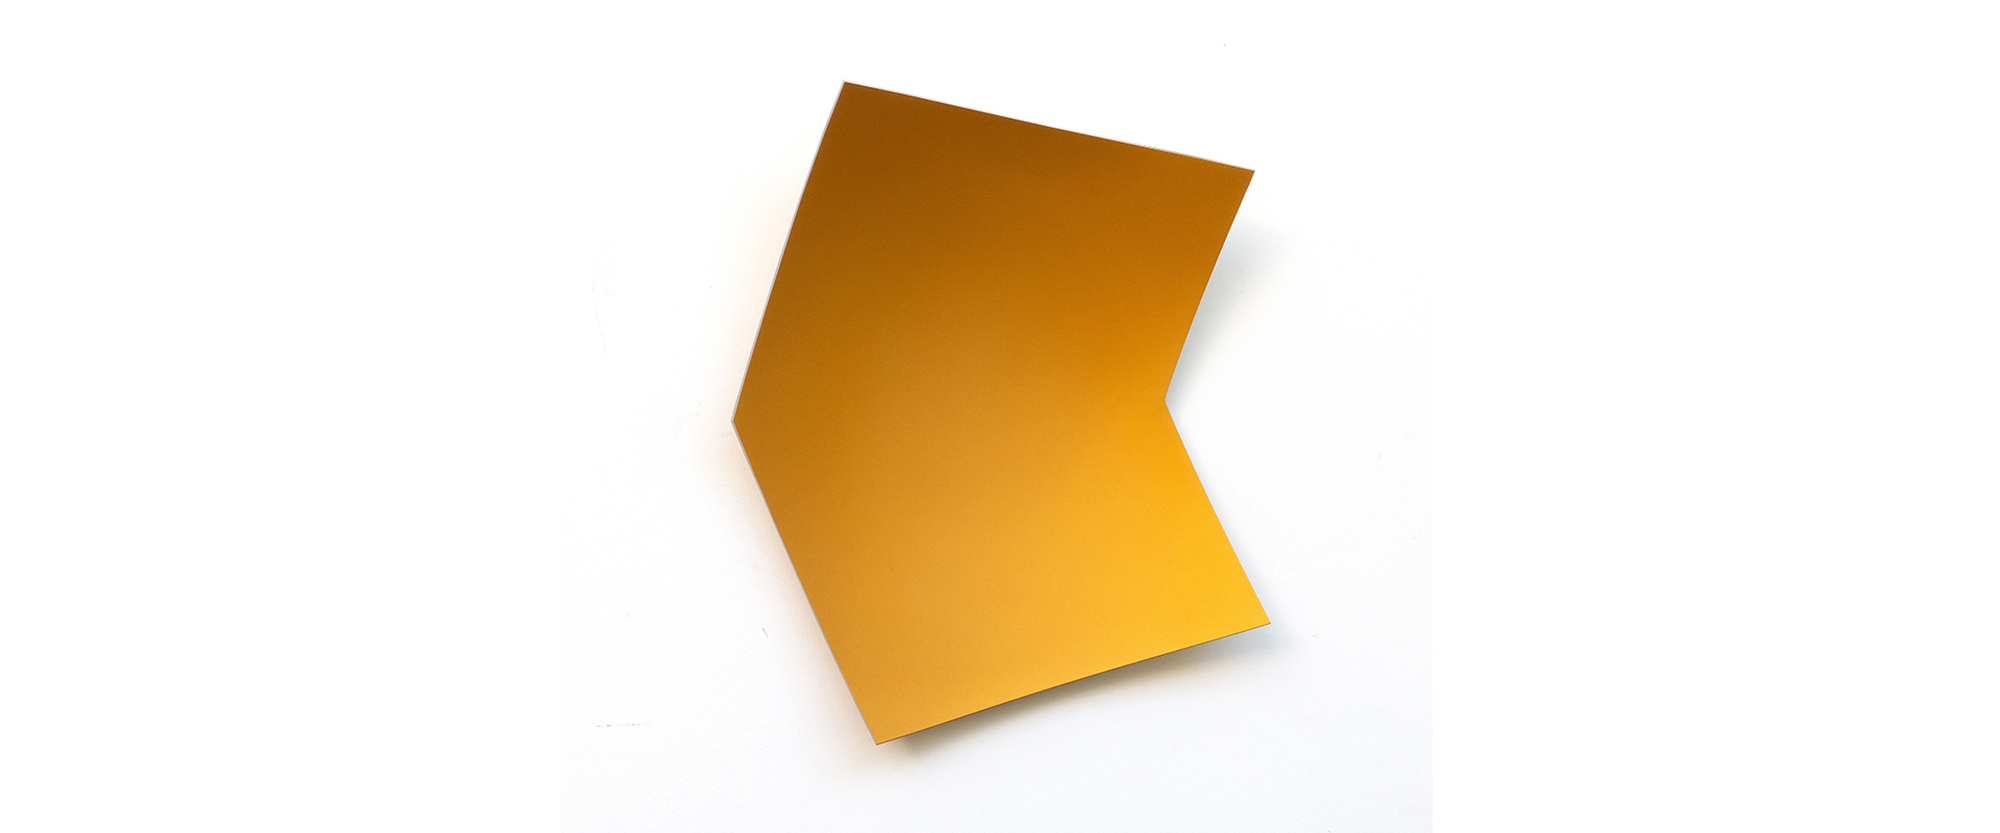 Ohne Titel – 2020, 20/20/726, Aluminium, eloxiert, 80 x 66 x 12 cm